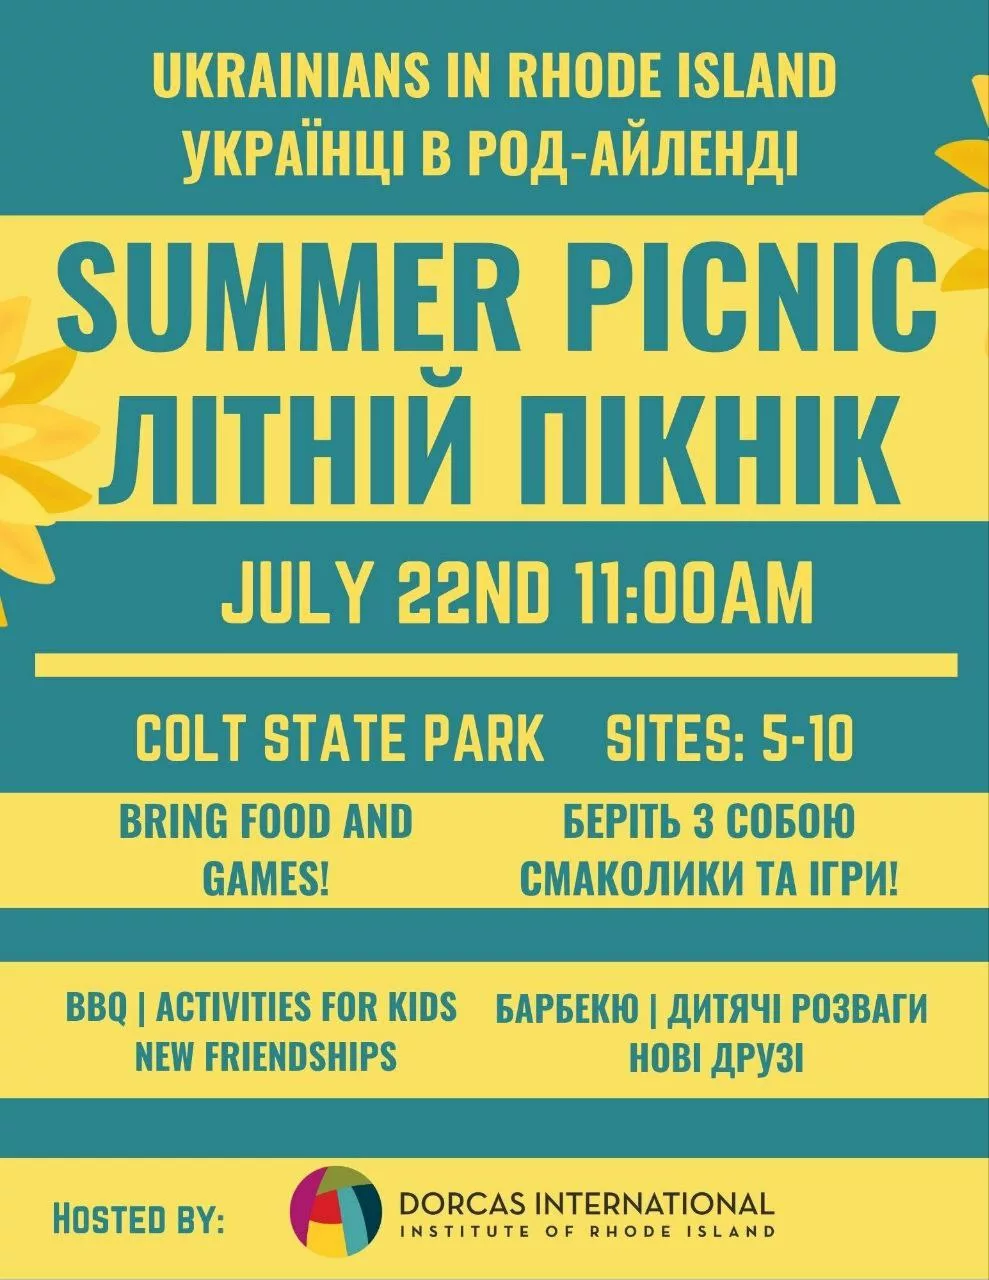 Summer picnic for Ukrainians in Rhode Island